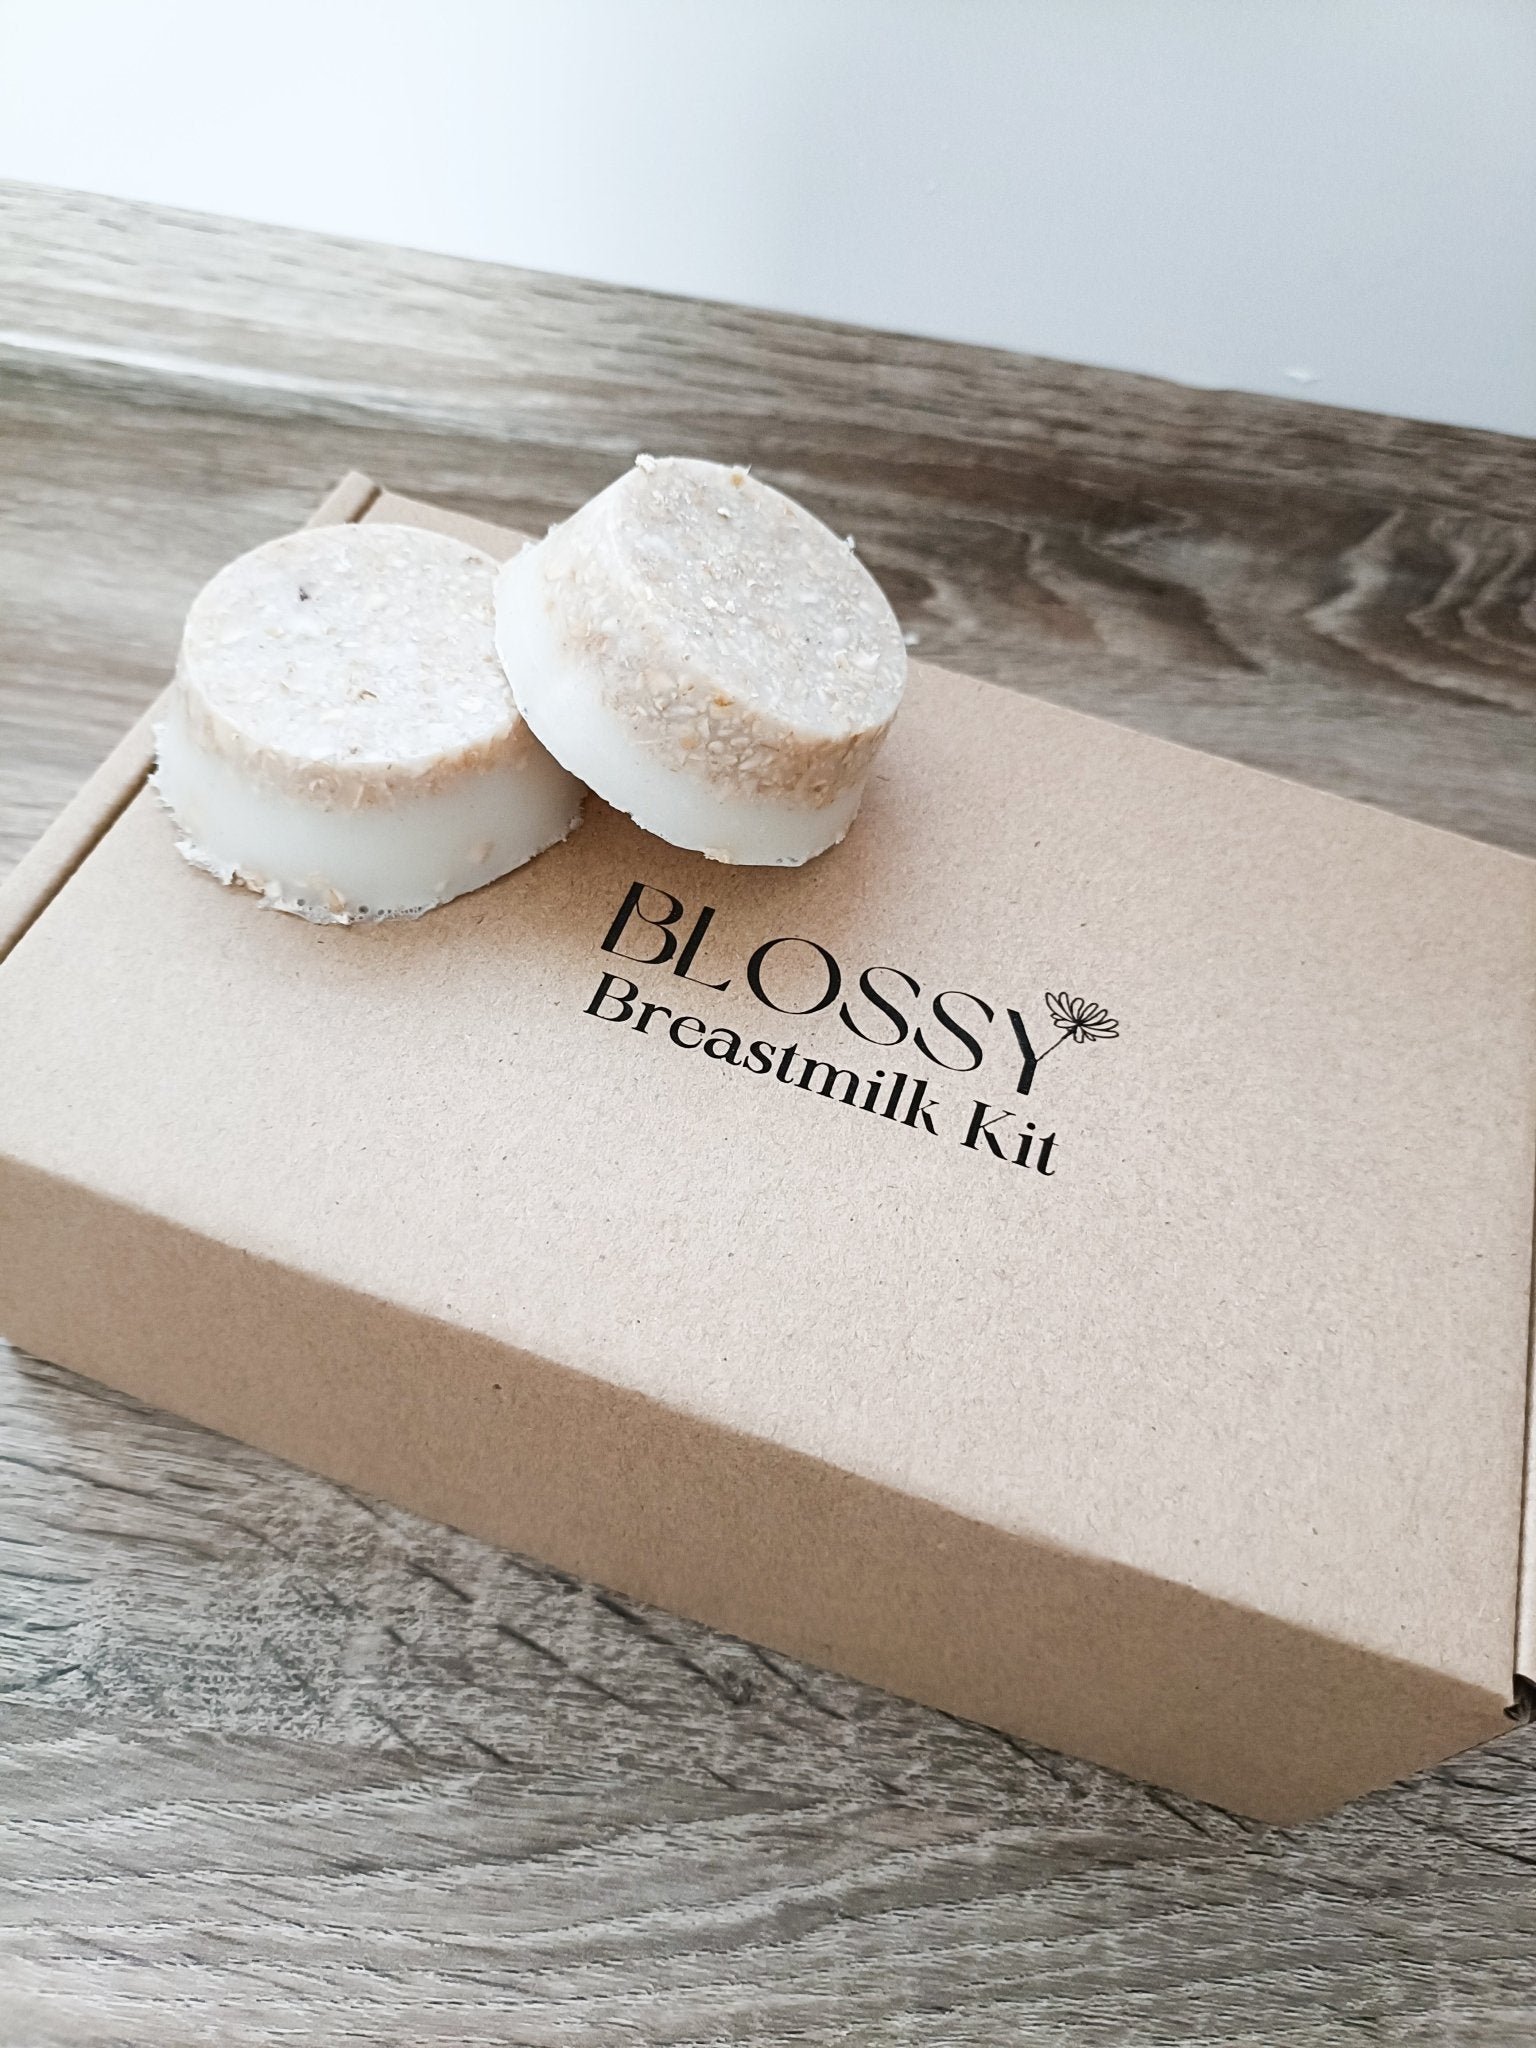 Blossy Breastmilk soap Kit - Blossy